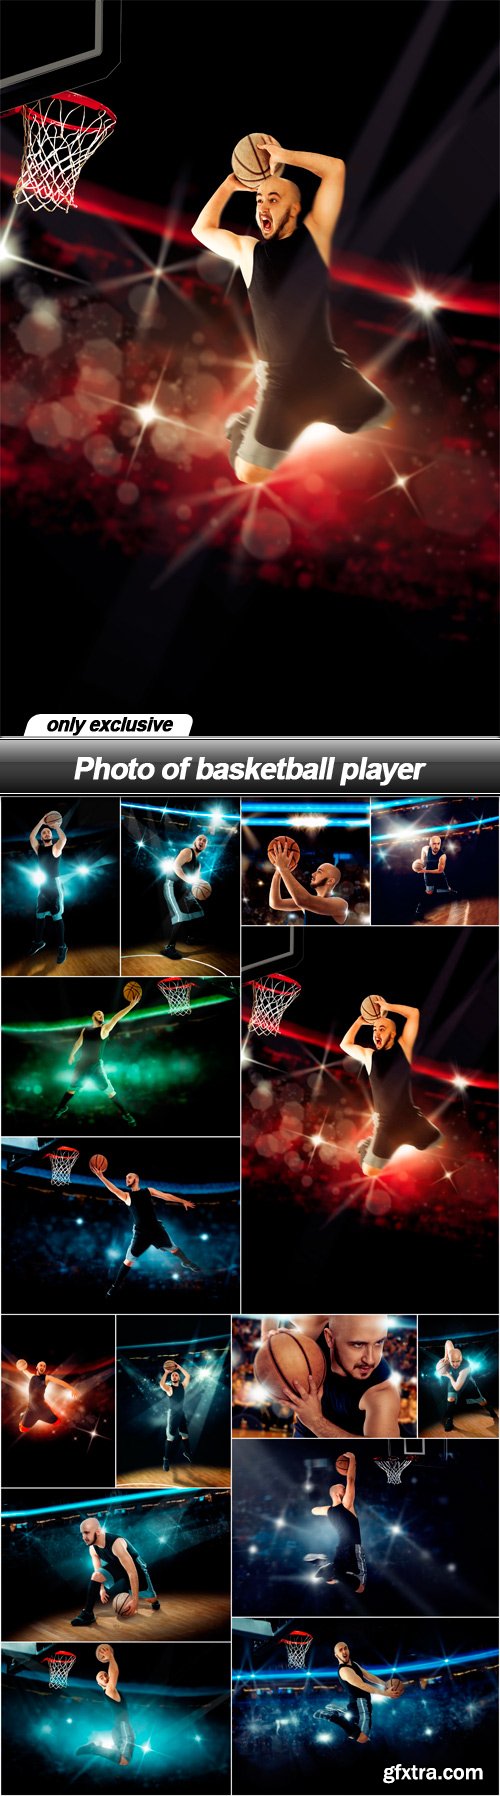 Photo of basketball player - 15 UHQ JPEG